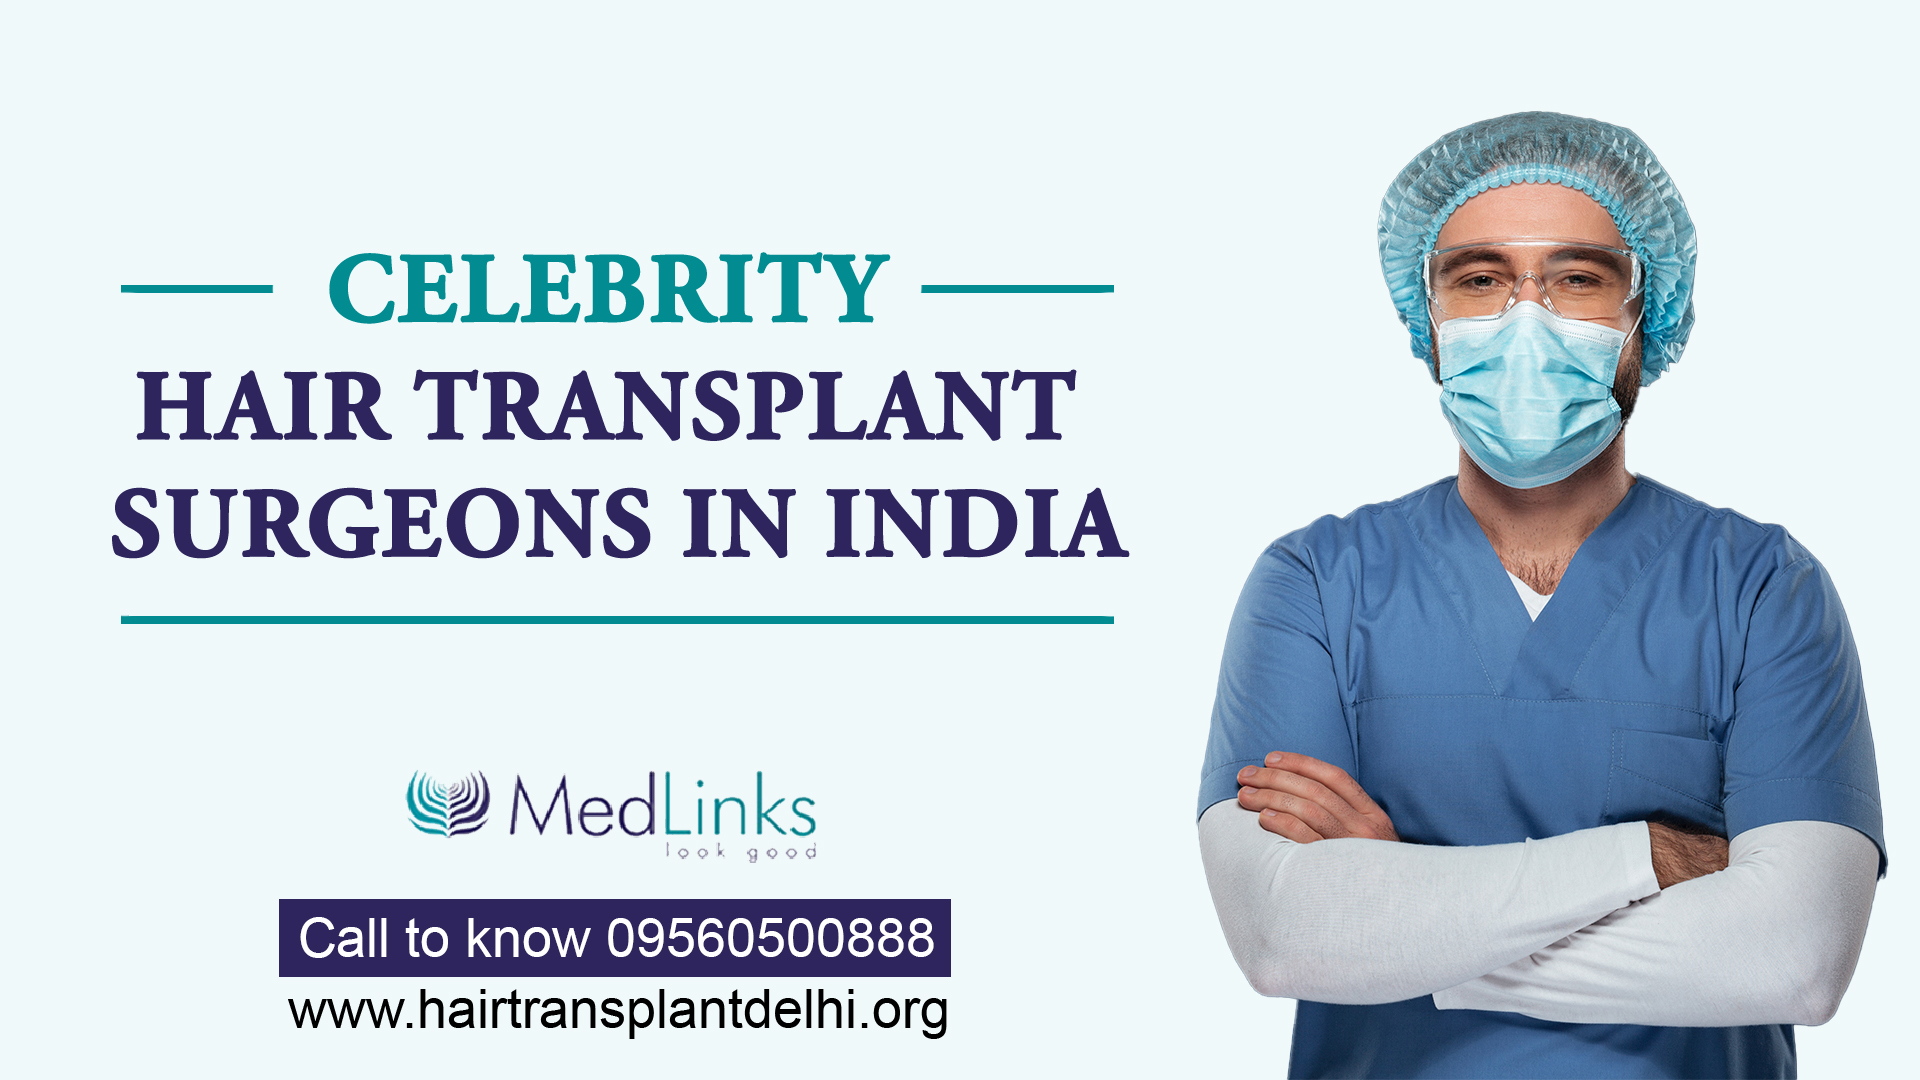 Celebrity Hair Transplant Surgeon In India, Delhi | Medlinks